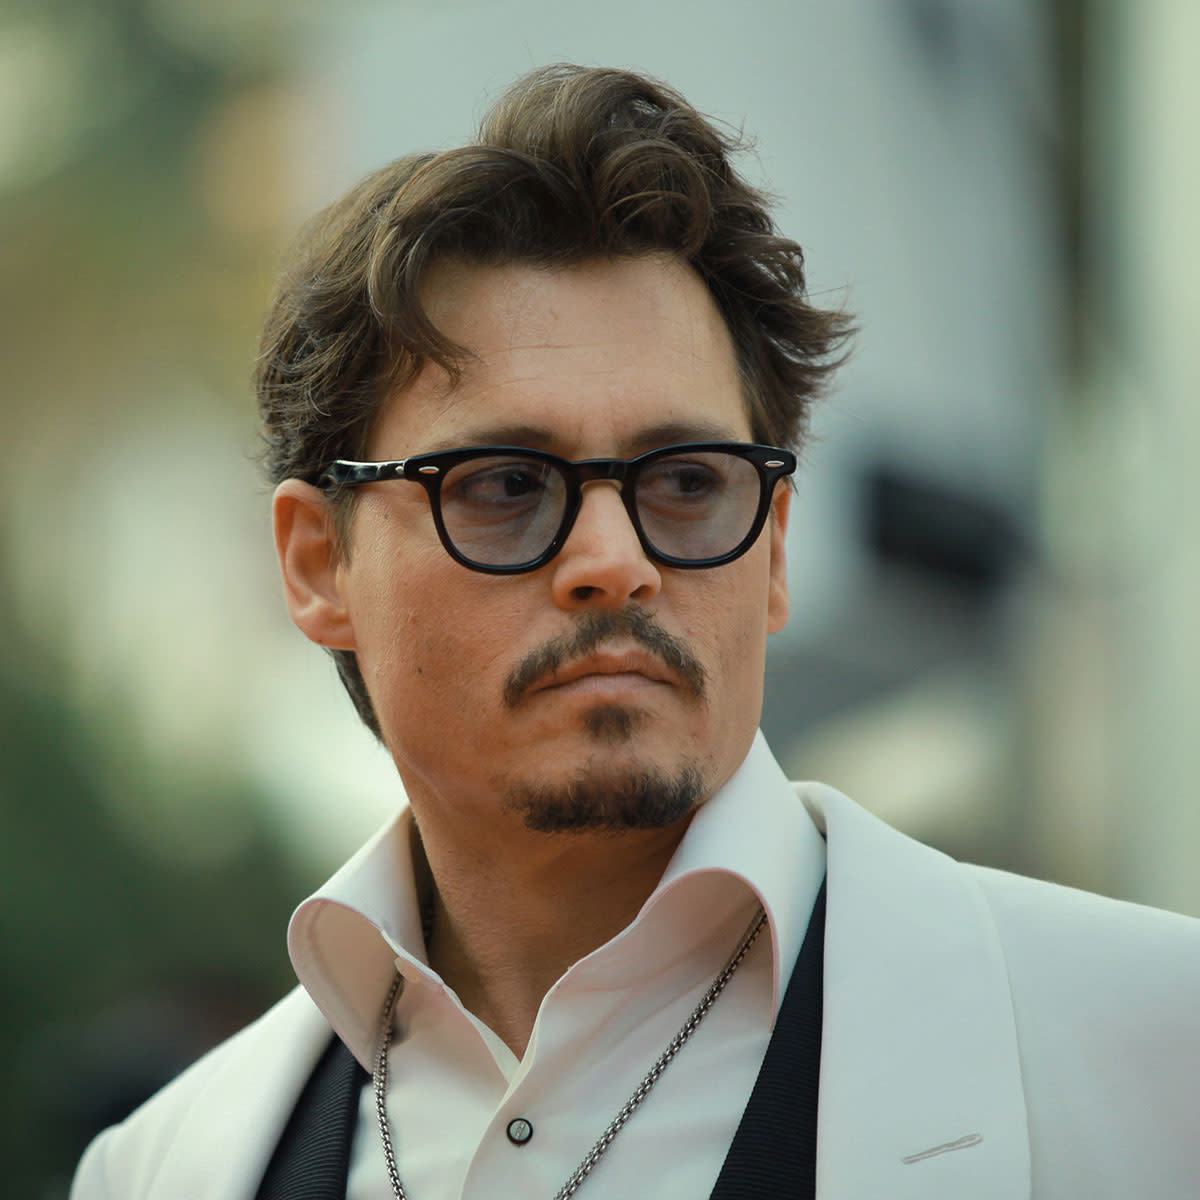 Johnny Depp Pirates of the Caribbean on Stranger Tides premiere